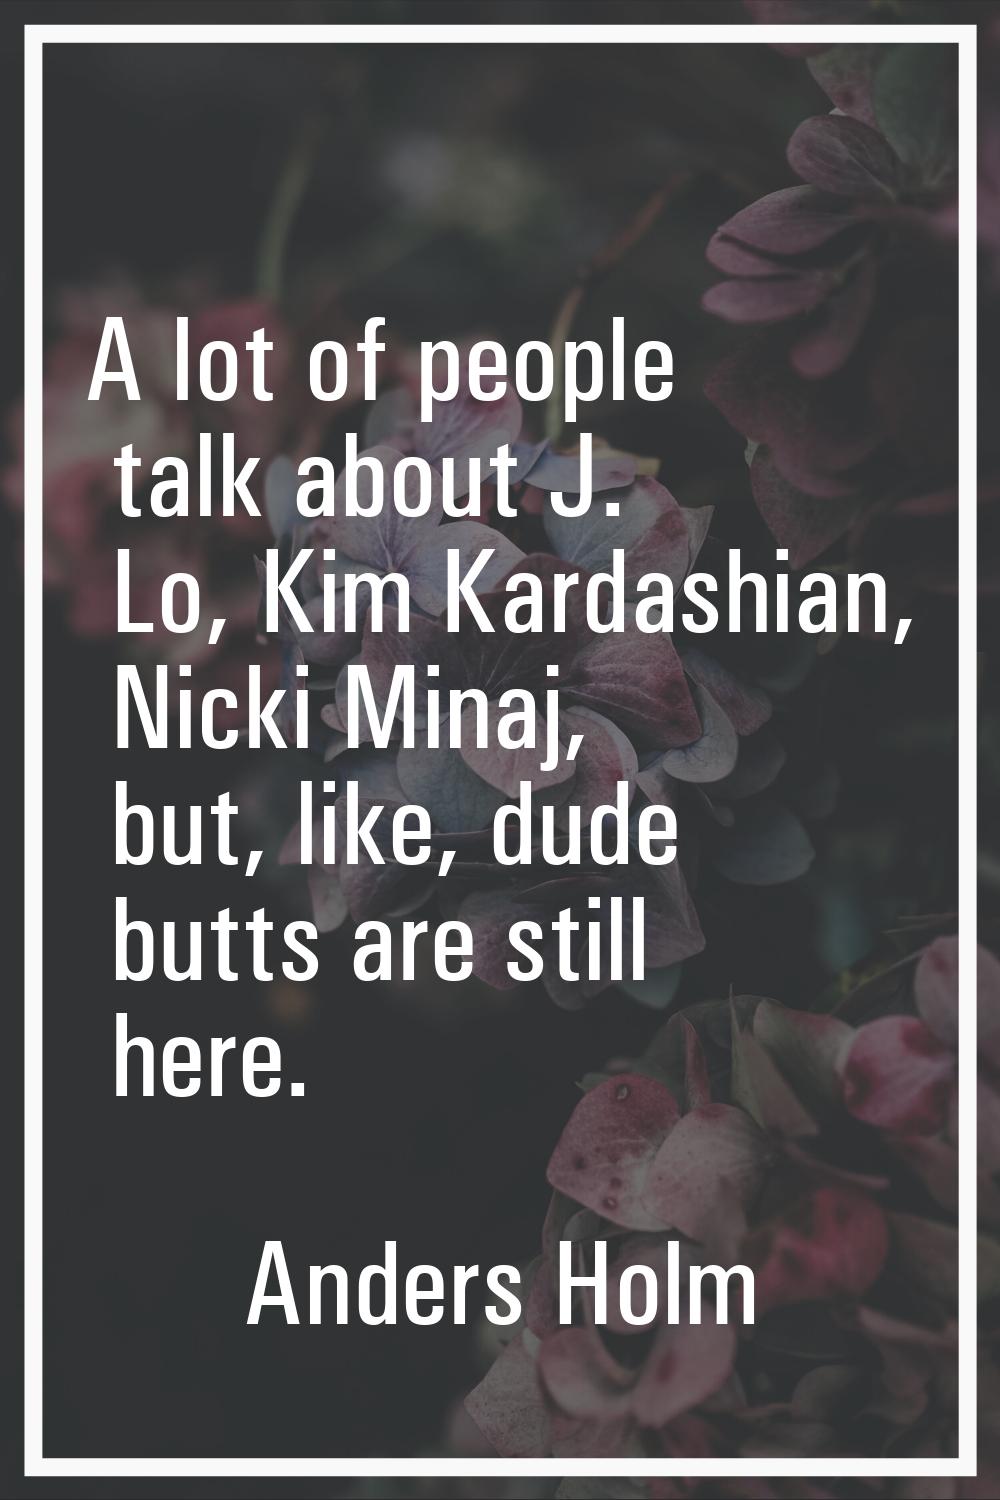 A lot of people talk about J. Lo, Kim Kardashian, Nicki Minaj, but, like, dude butts are still here